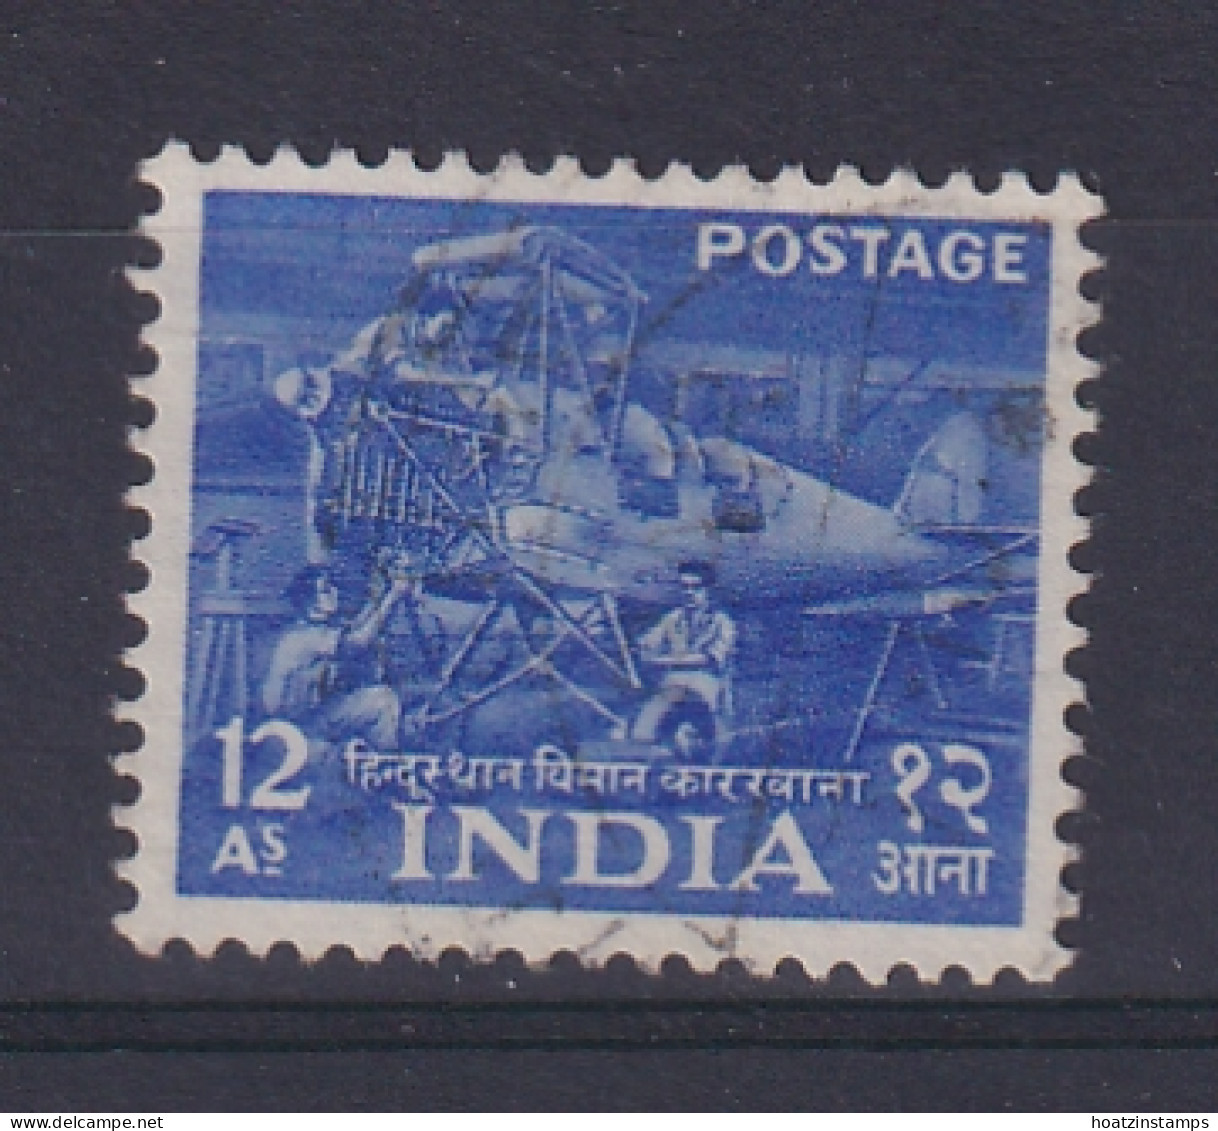 India: 1955   Five Year Plan    SG364    12a   Used - Gebruikt